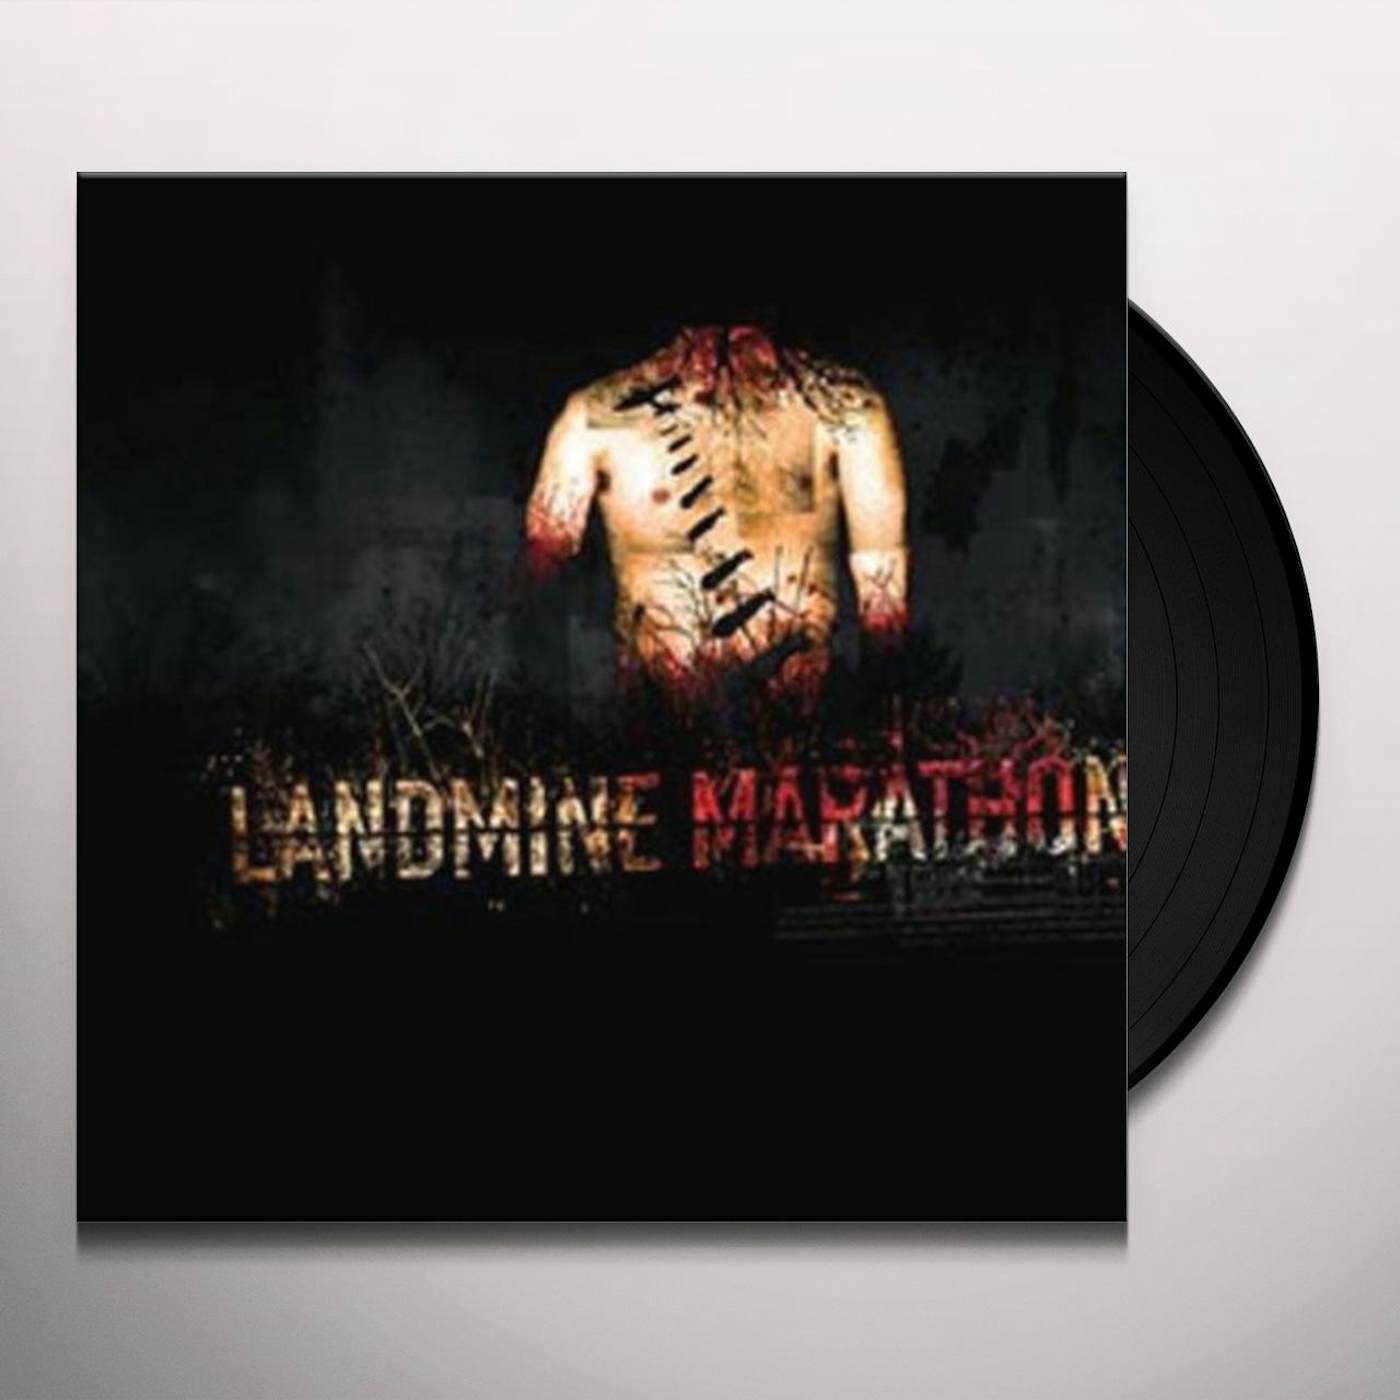 Landmine Marathon Wounded Vinyl Record